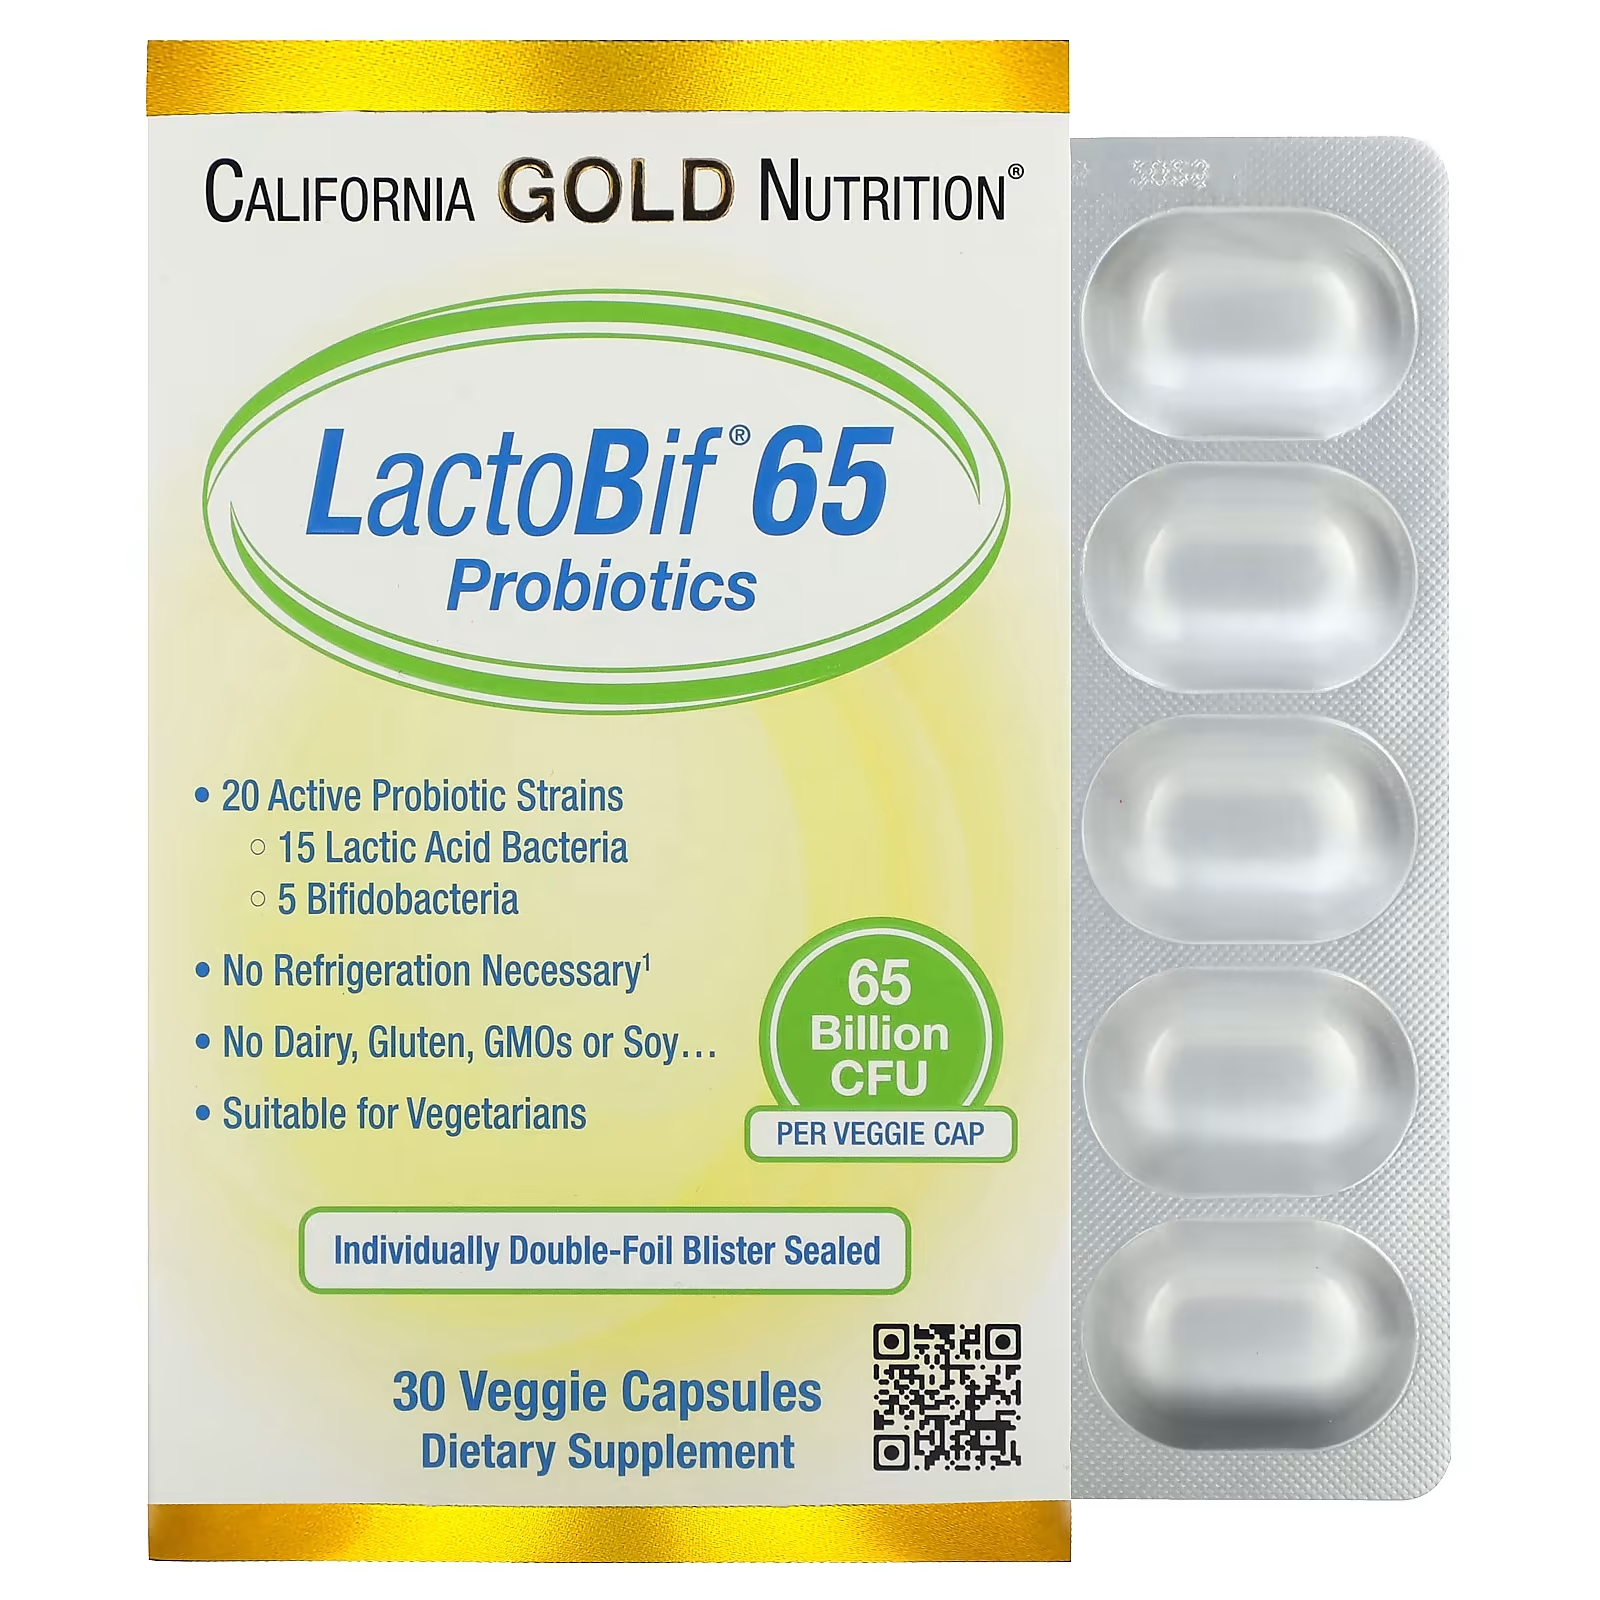 California Gold Nutrition LactoBif 65 Пробиотики 65 миллиардов КОЕ 30 растительных капсул california gold nutrition lactobif 65 пробиотики 65 миллиардов кое 30 растительных капсул